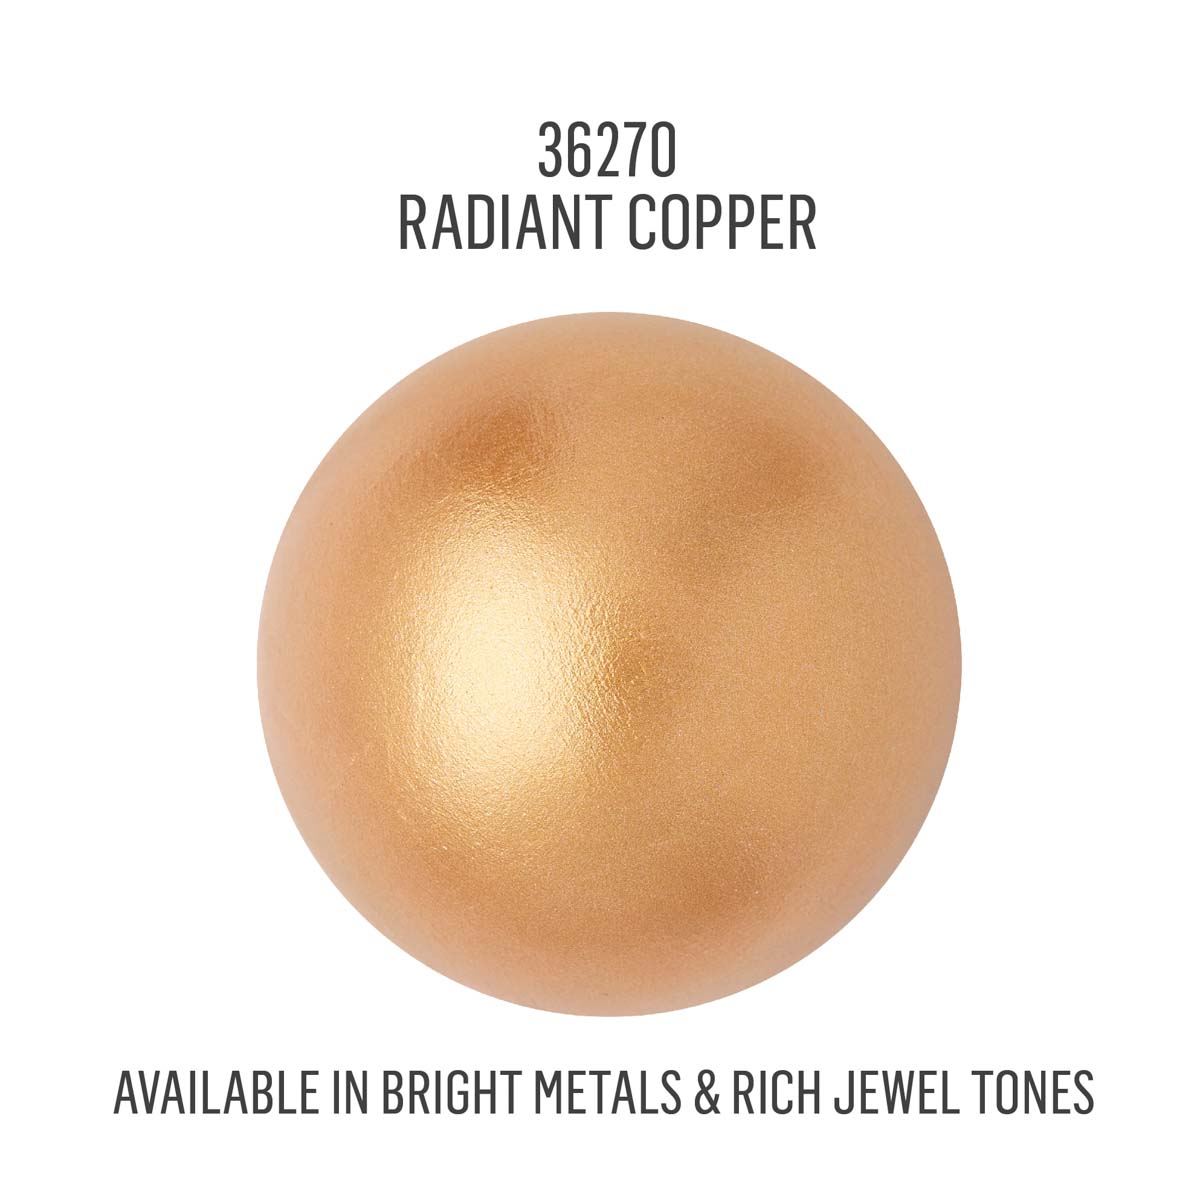 FolkArt ® Metallics - Radiant Copper, 2 oz. - 36270